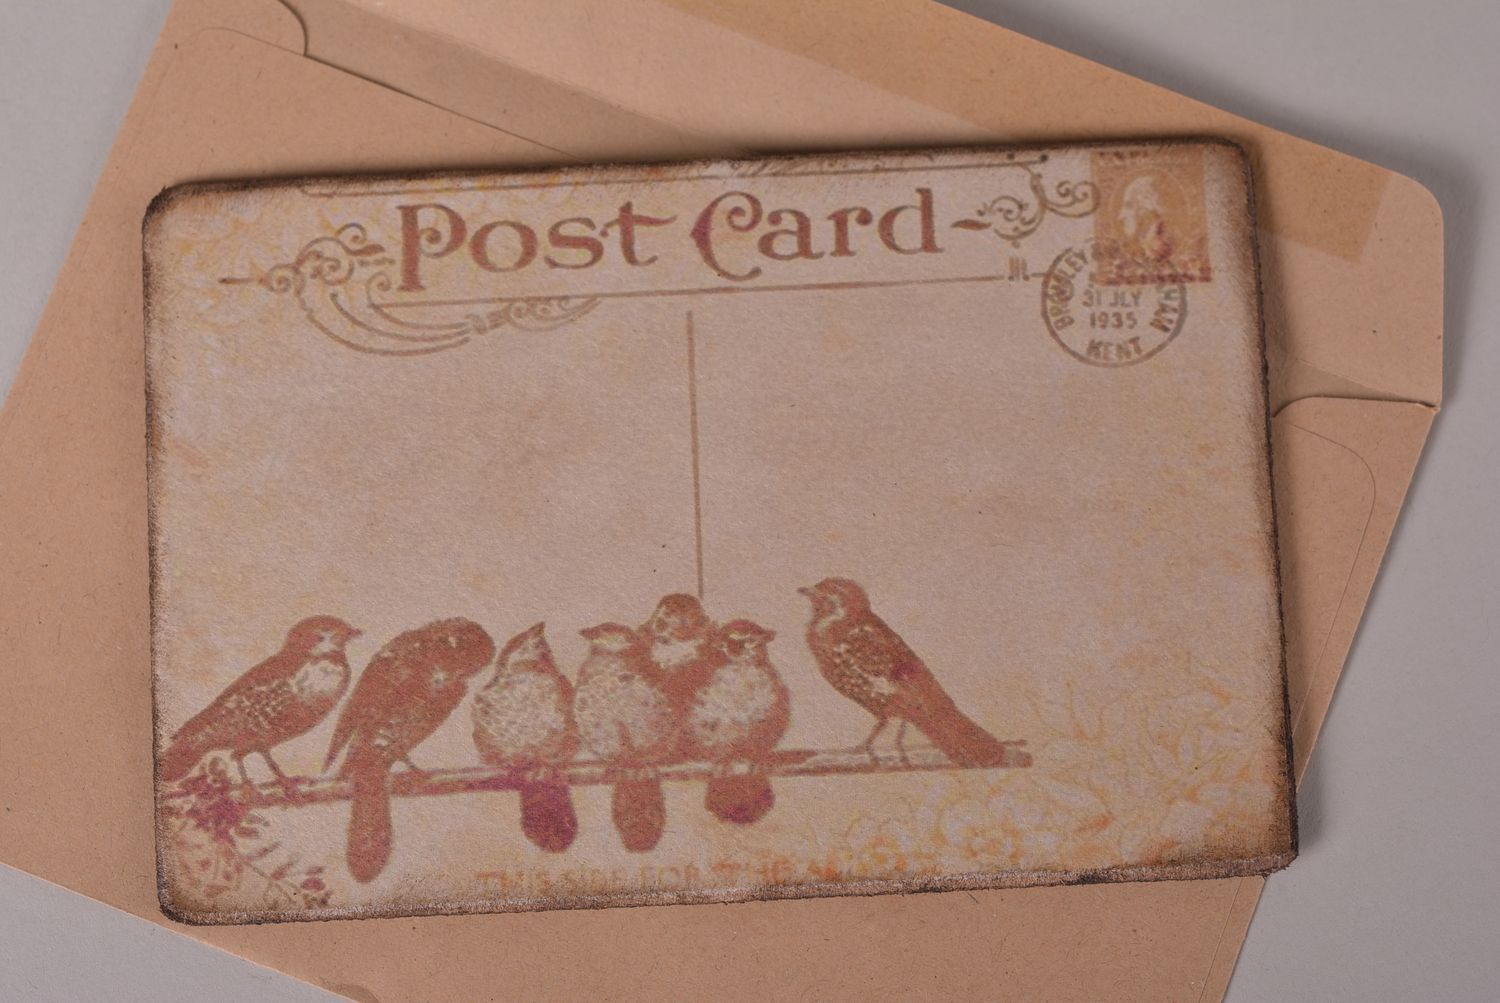 Unusual handmade post card greeting cards vintage Christmas card gift ideas photo 2